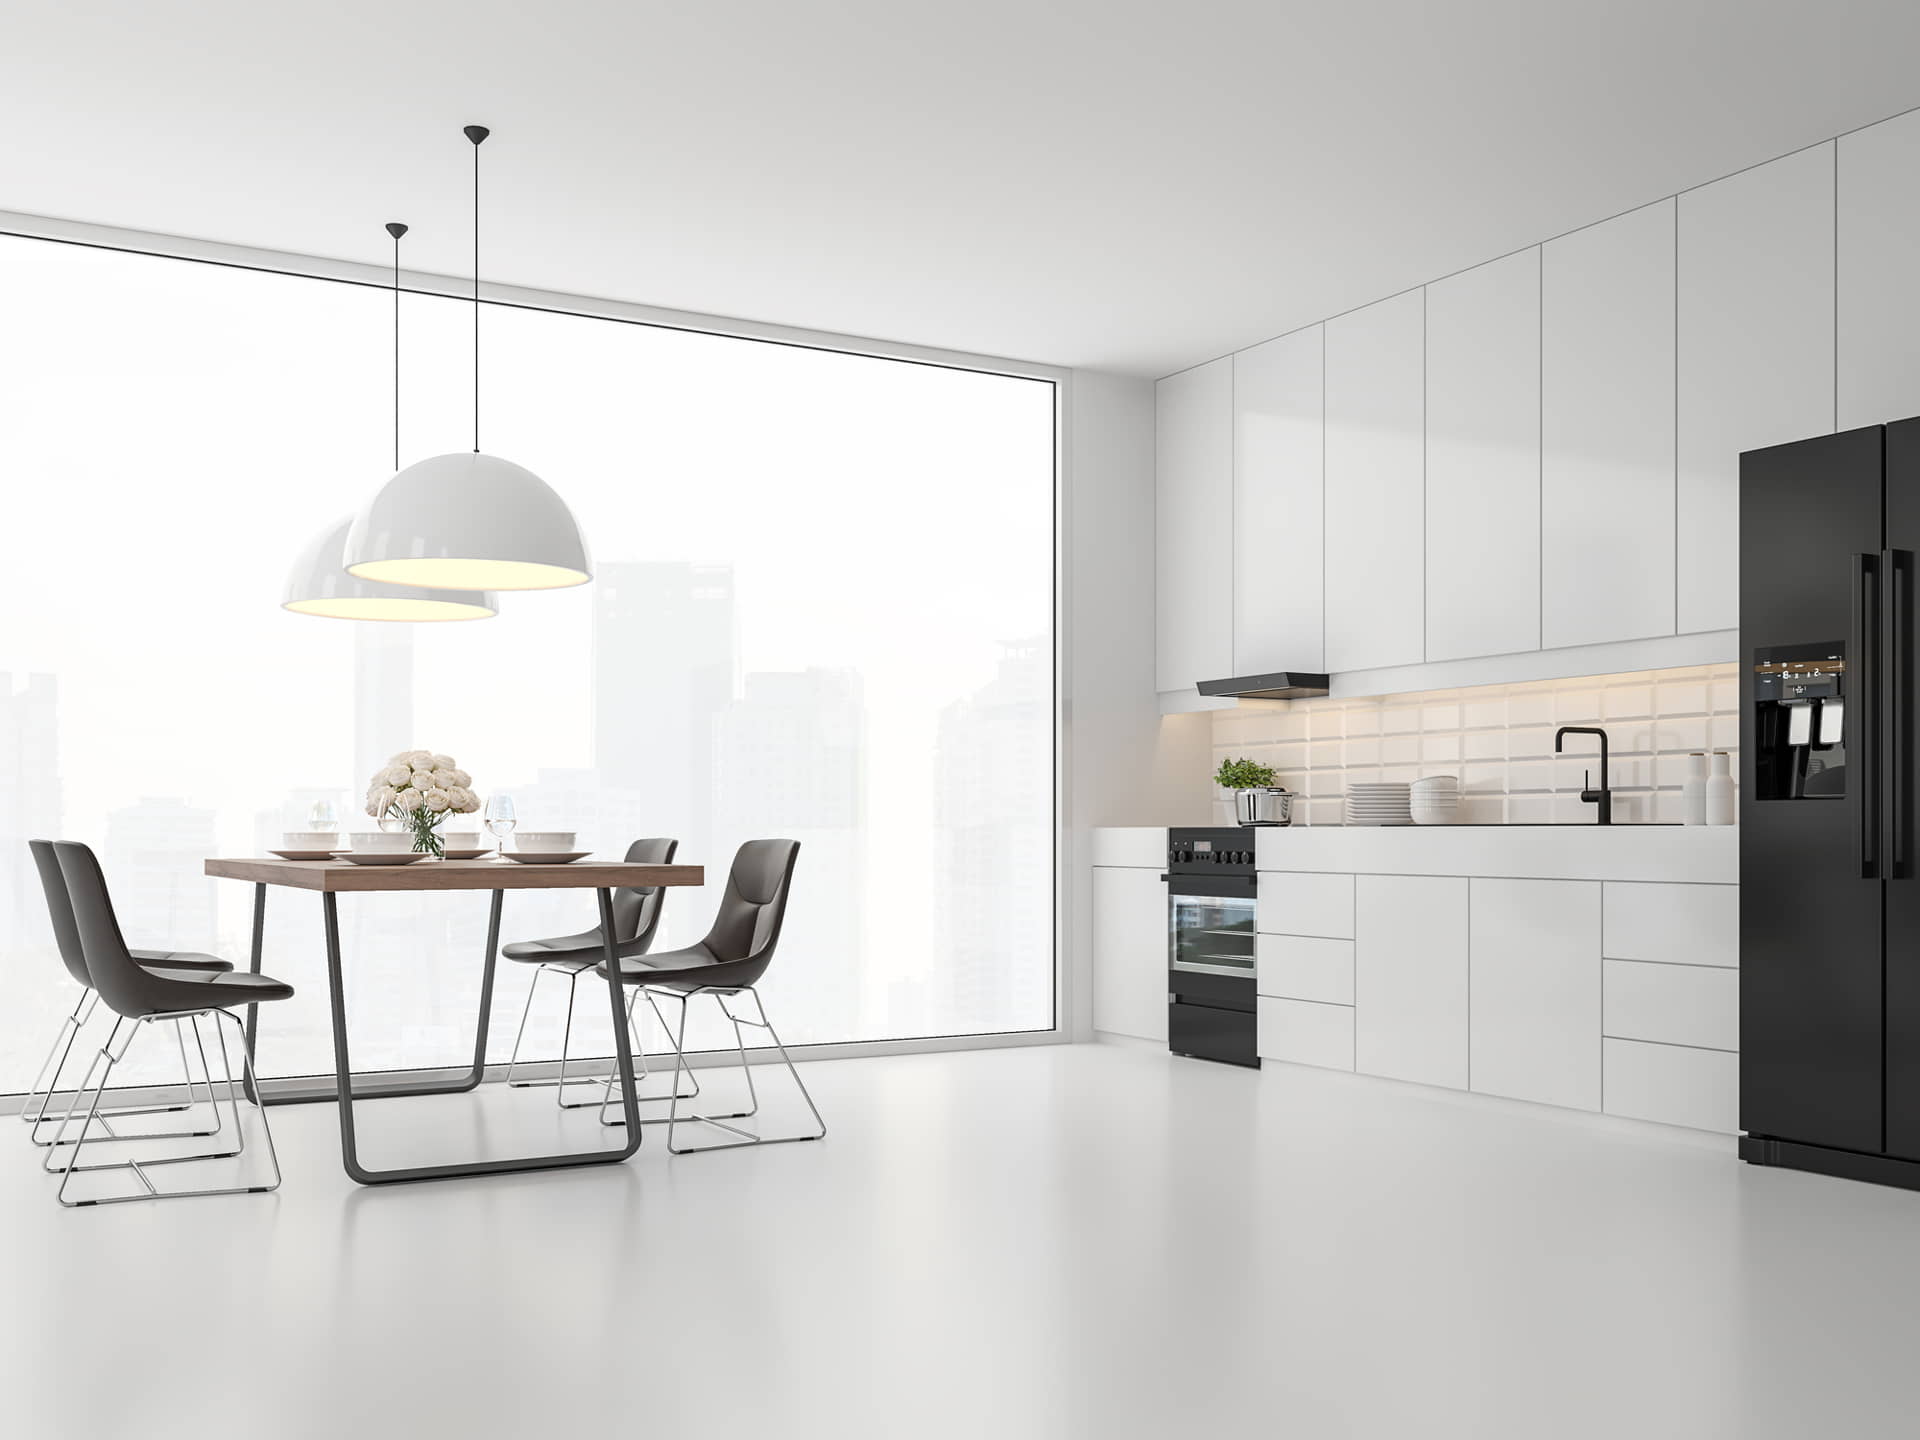 Bright modern kitchen with white microcement floor